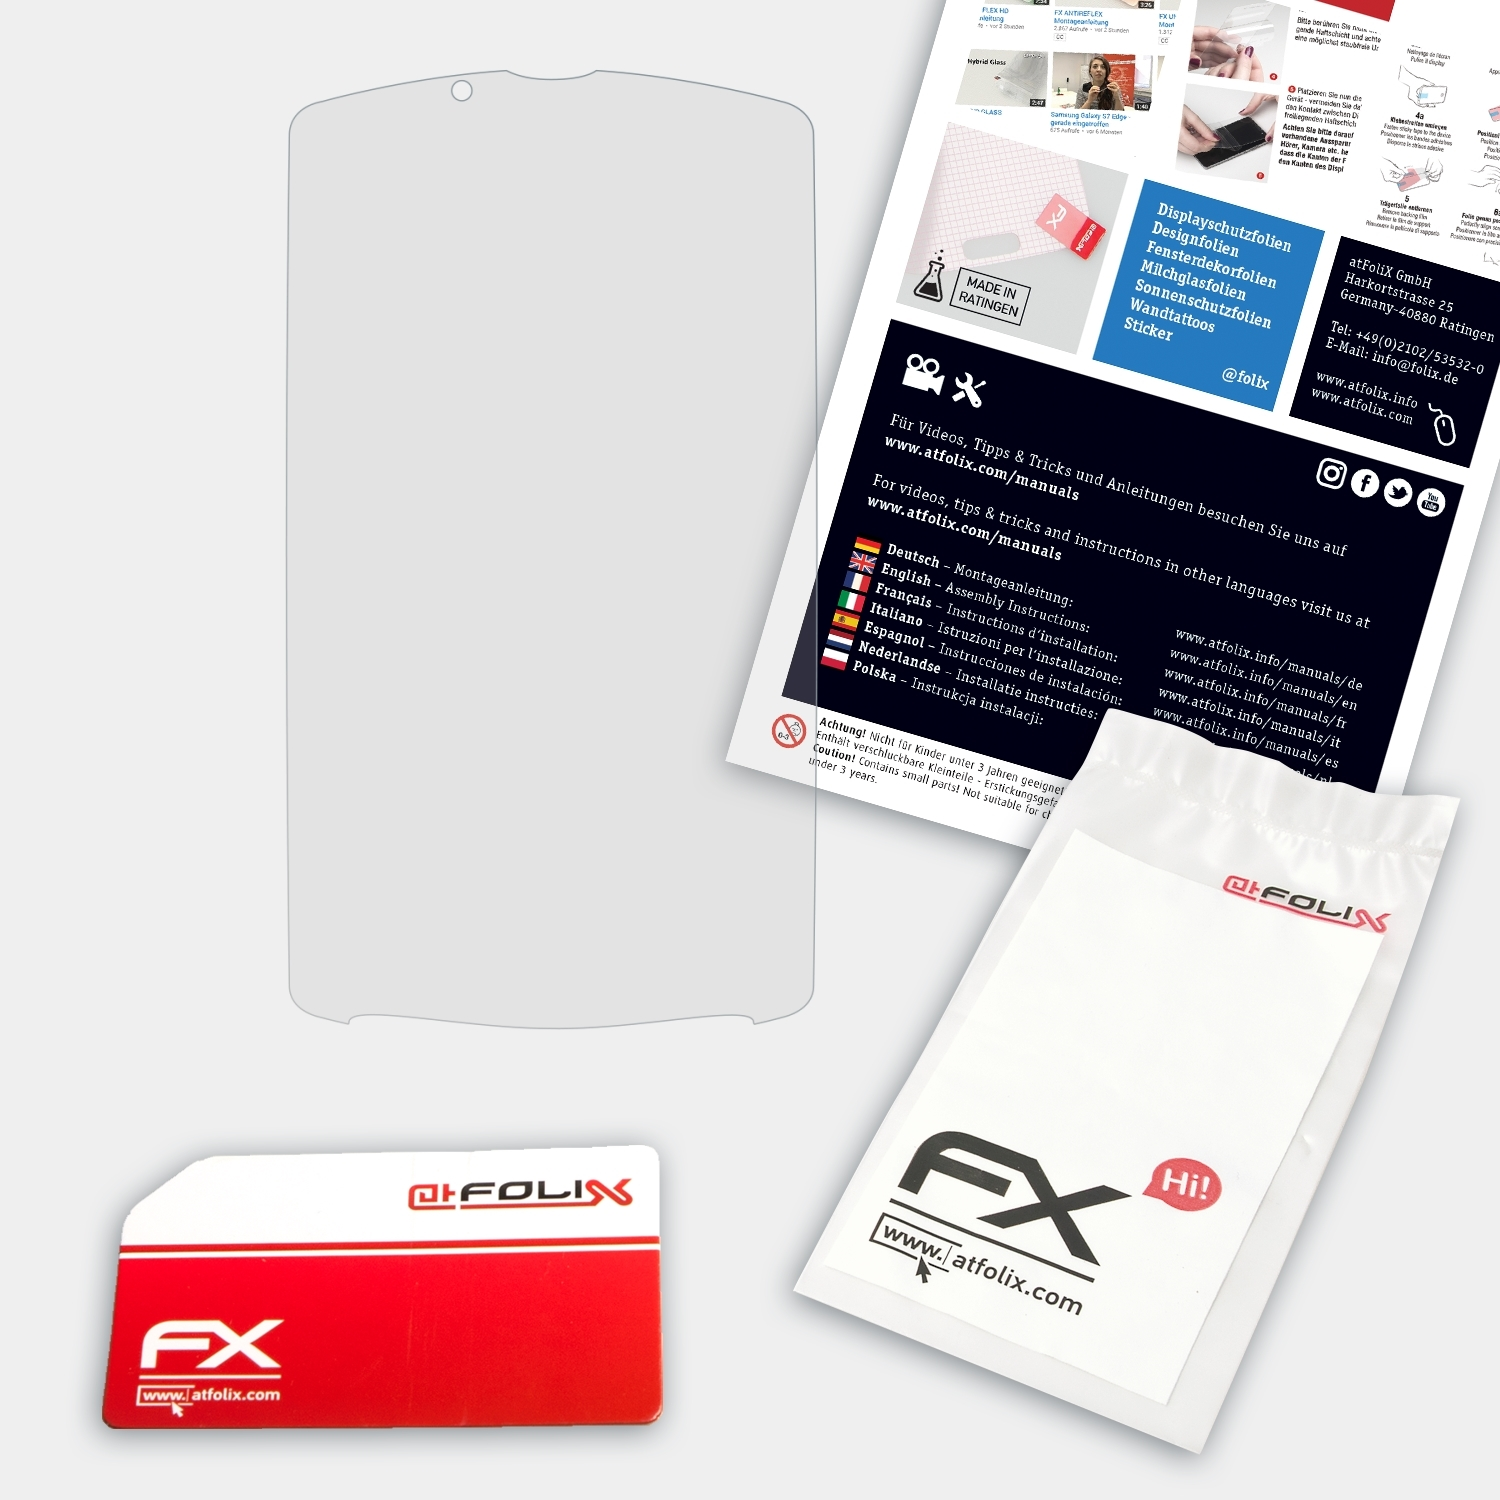 Xperia ATFOLIX Sony-Ericsson Schutzglas(für FX-Hybrid-Glass play)